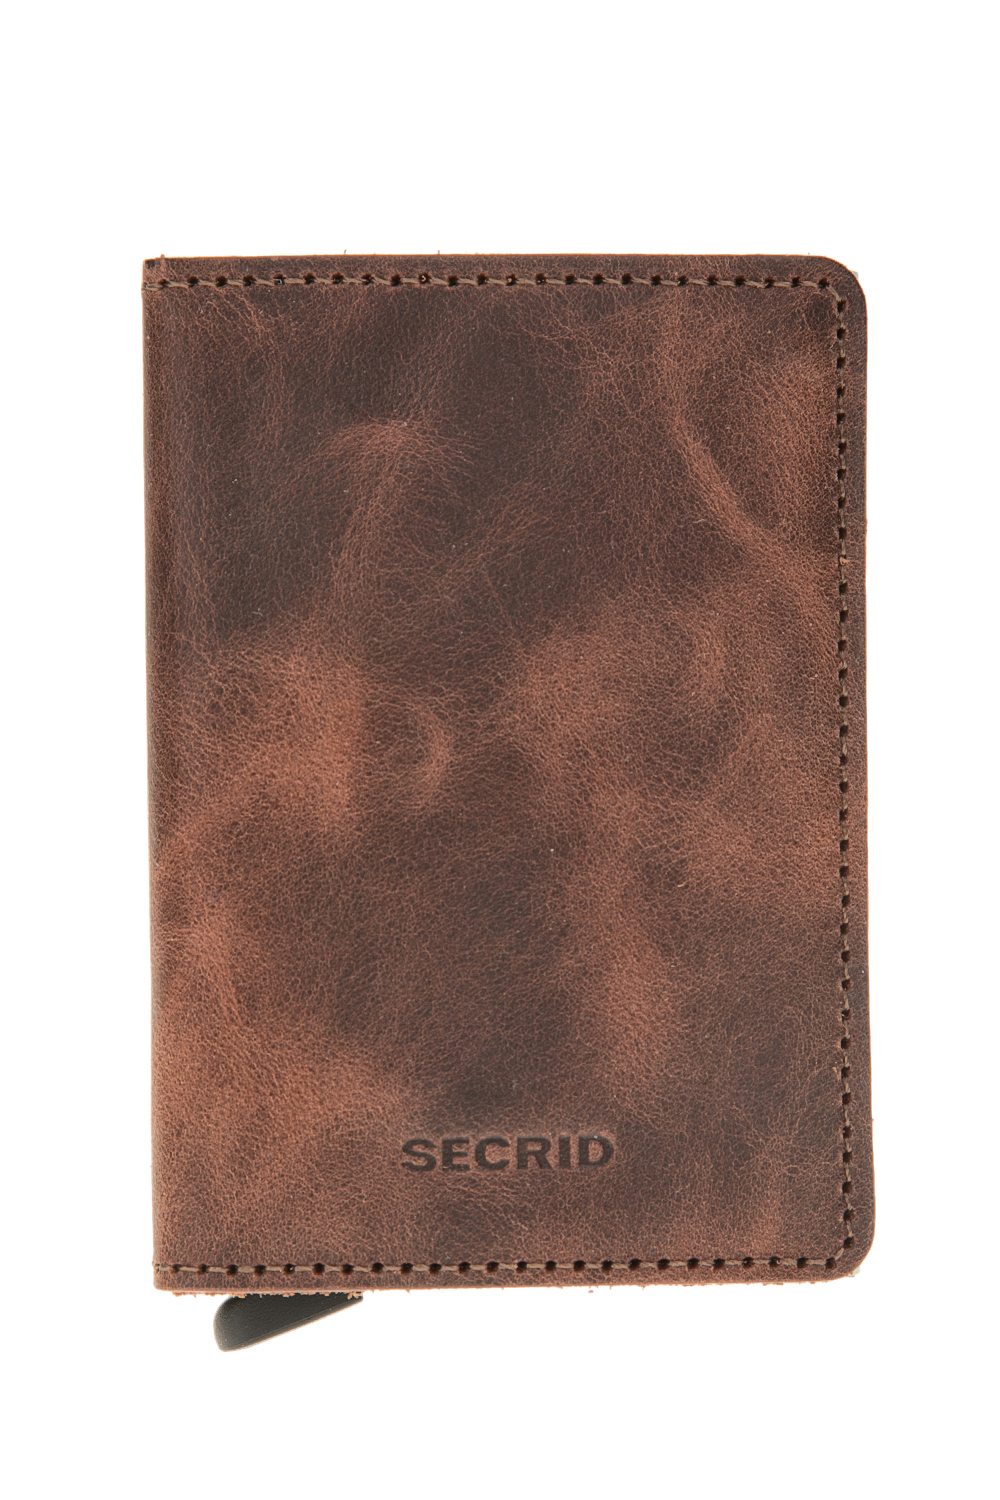 SECRID – Θήκη καρτών SECRID Slimwallet Vintage καφέ 1680150.0-00K4